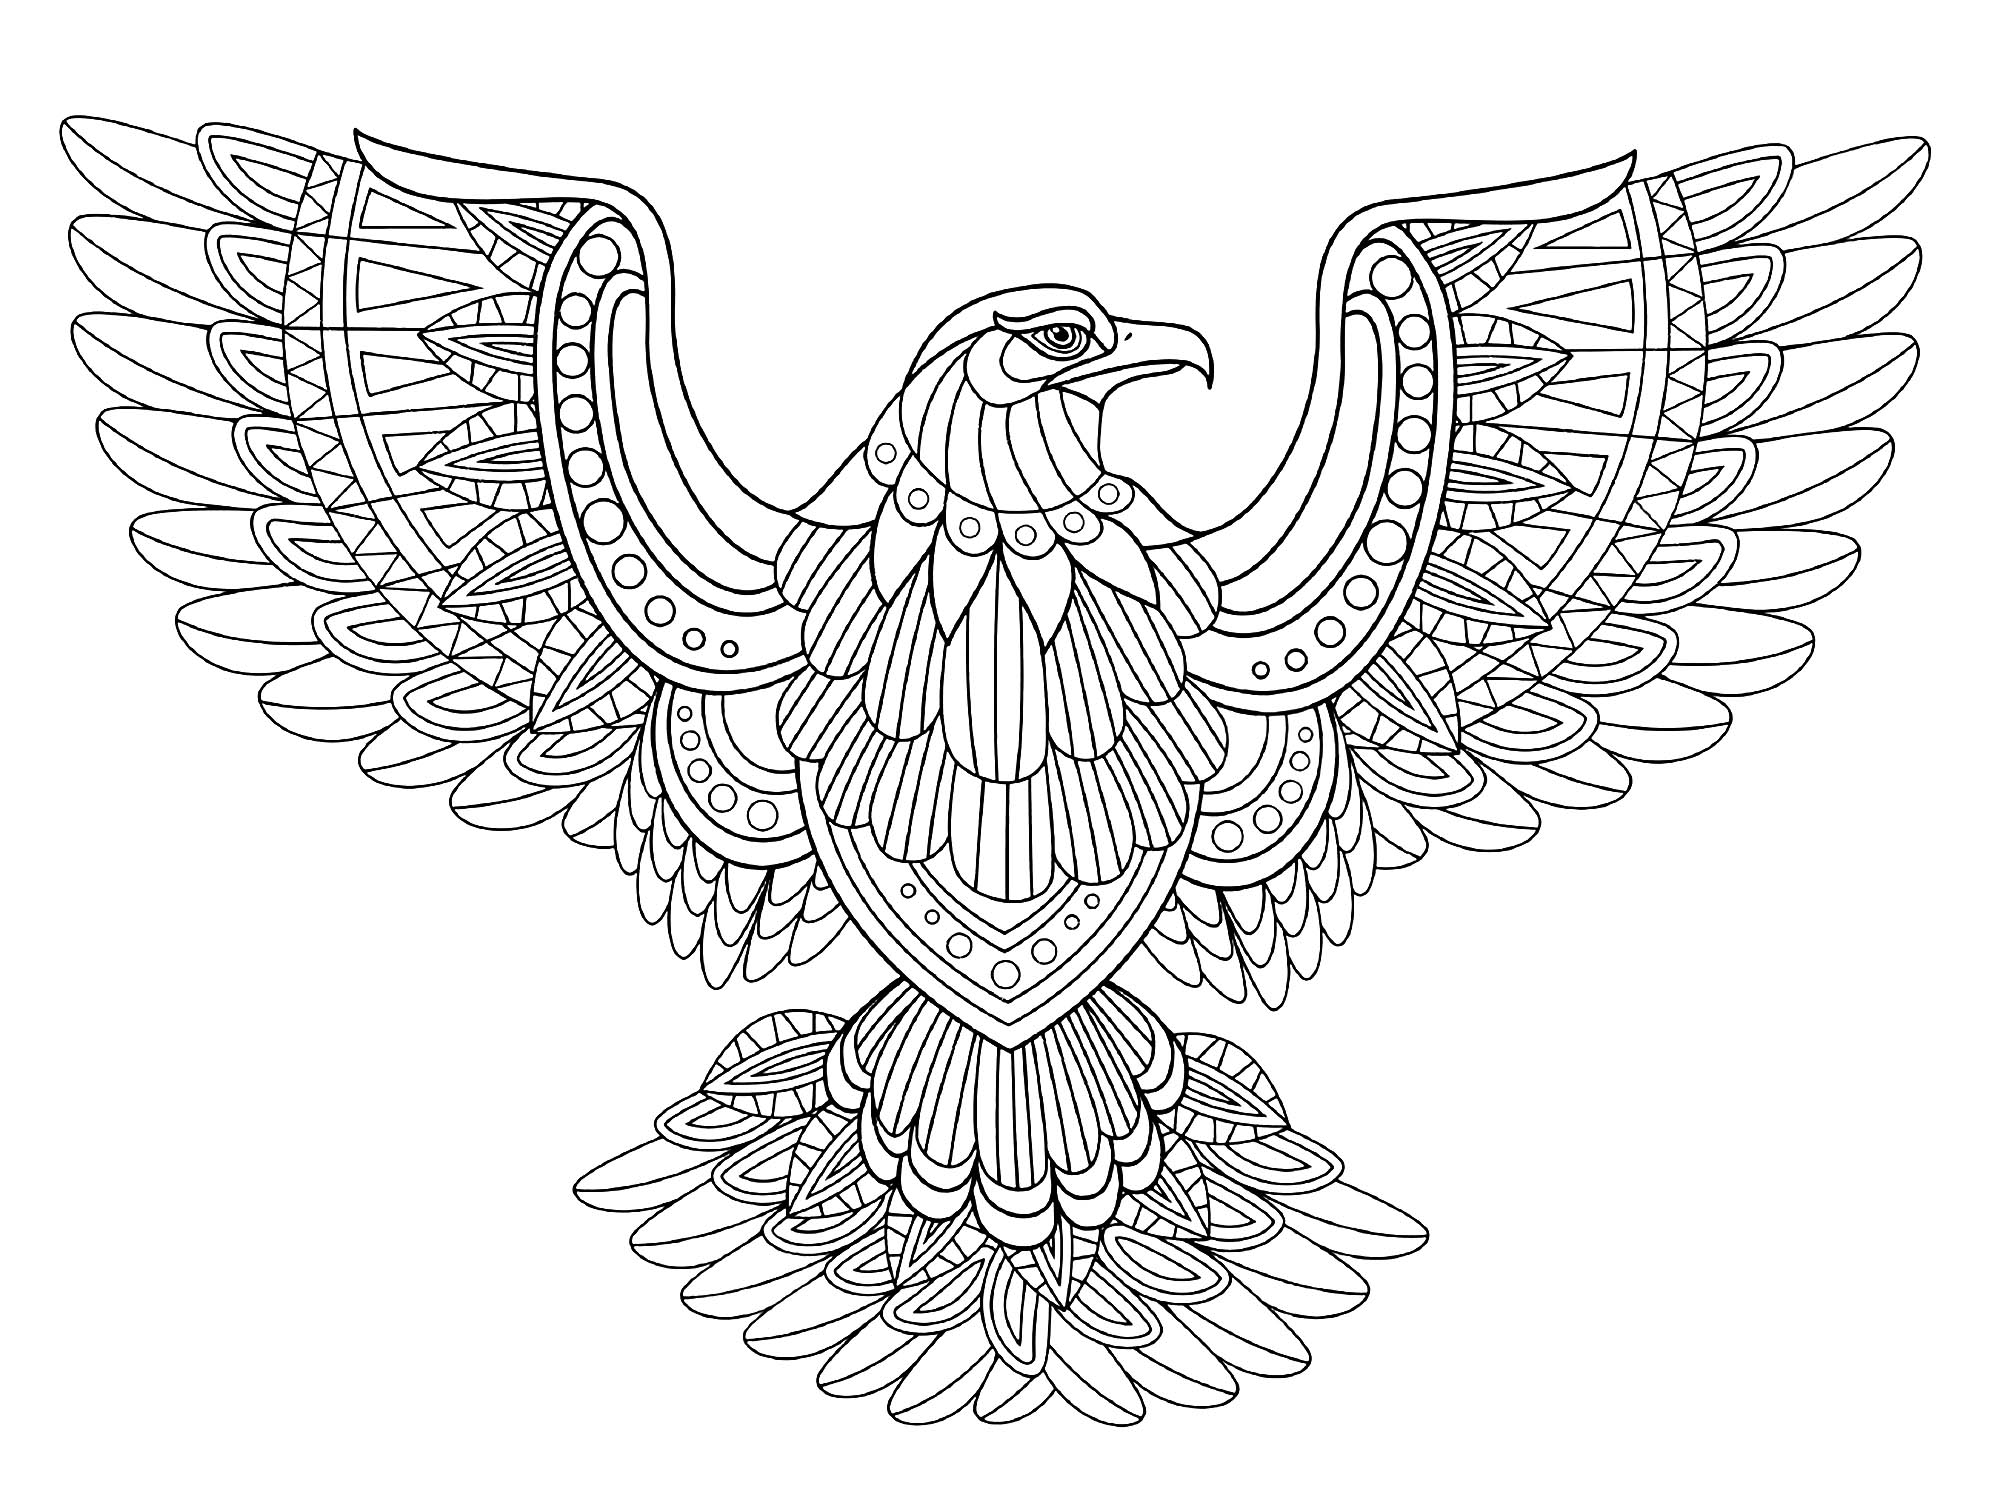 Águia de asas abertas, Artista : Kchung   Fonte : 123rf